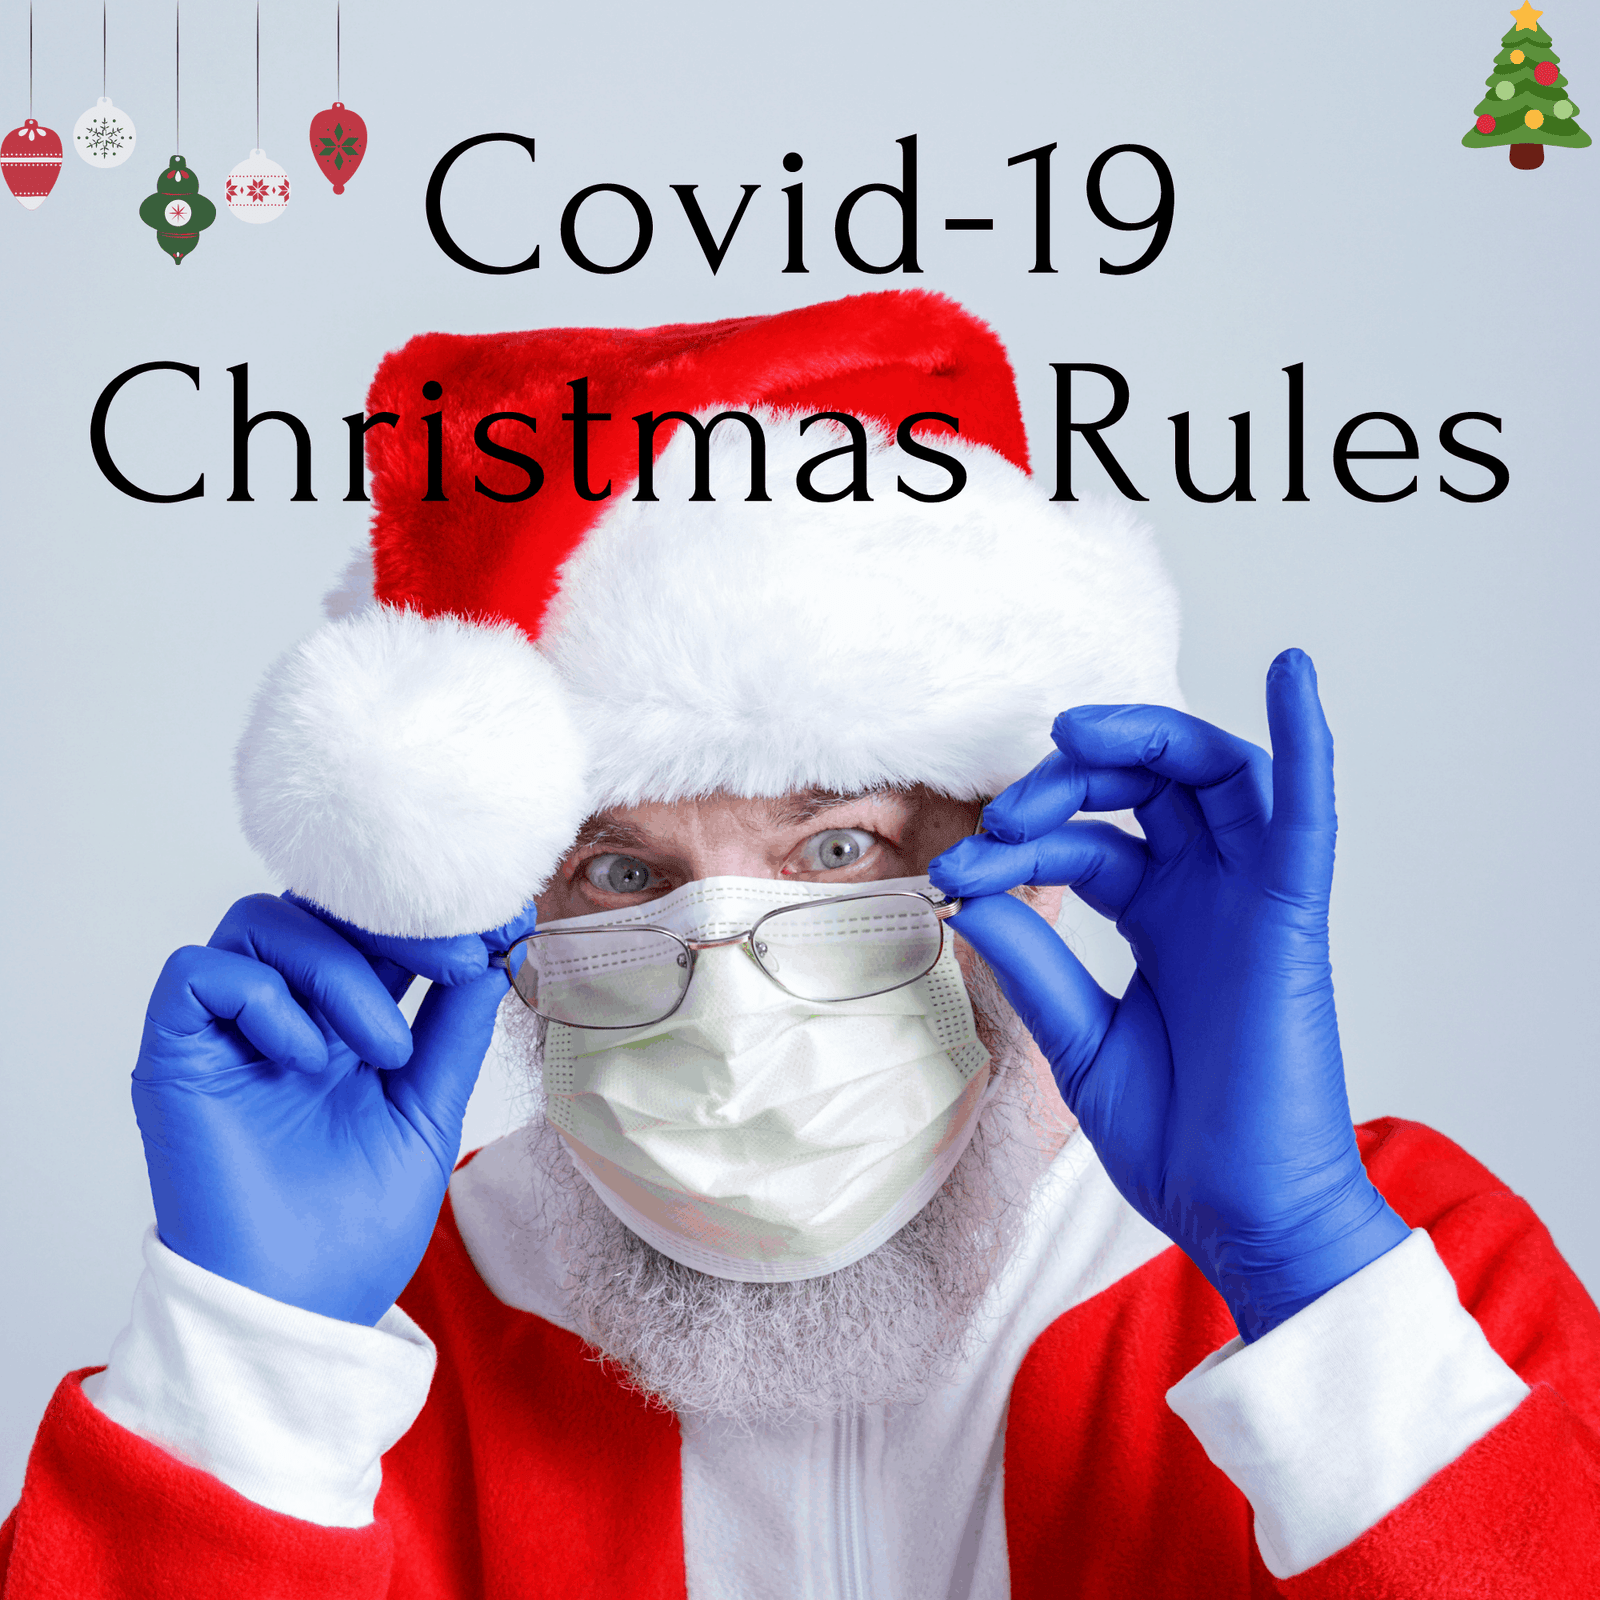 Covid-19 Christmas Rules